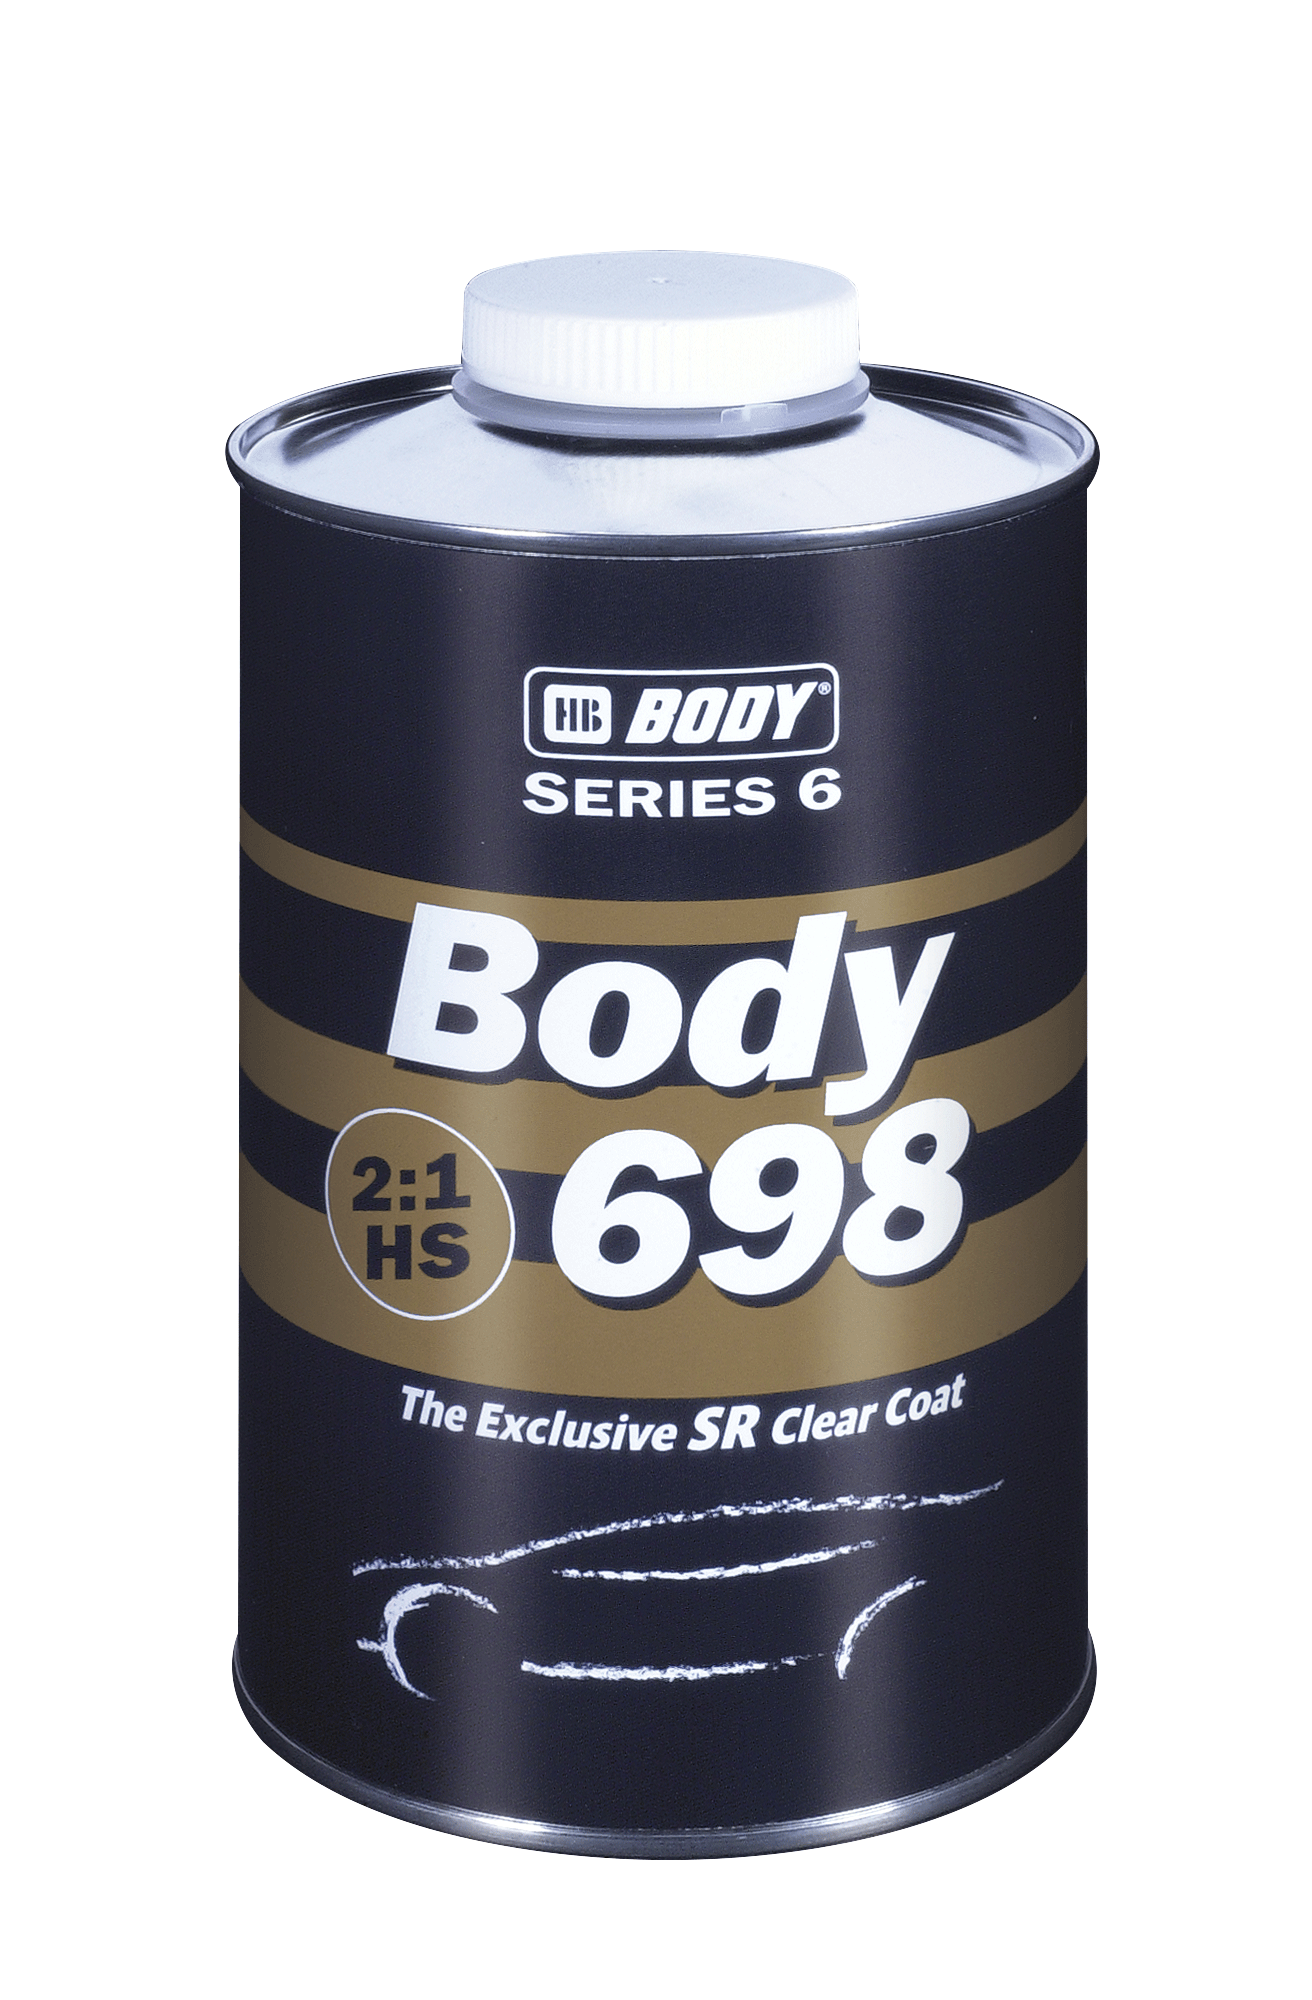 HB BODY Body 698 2:1 HS Clearcoat SR 5L